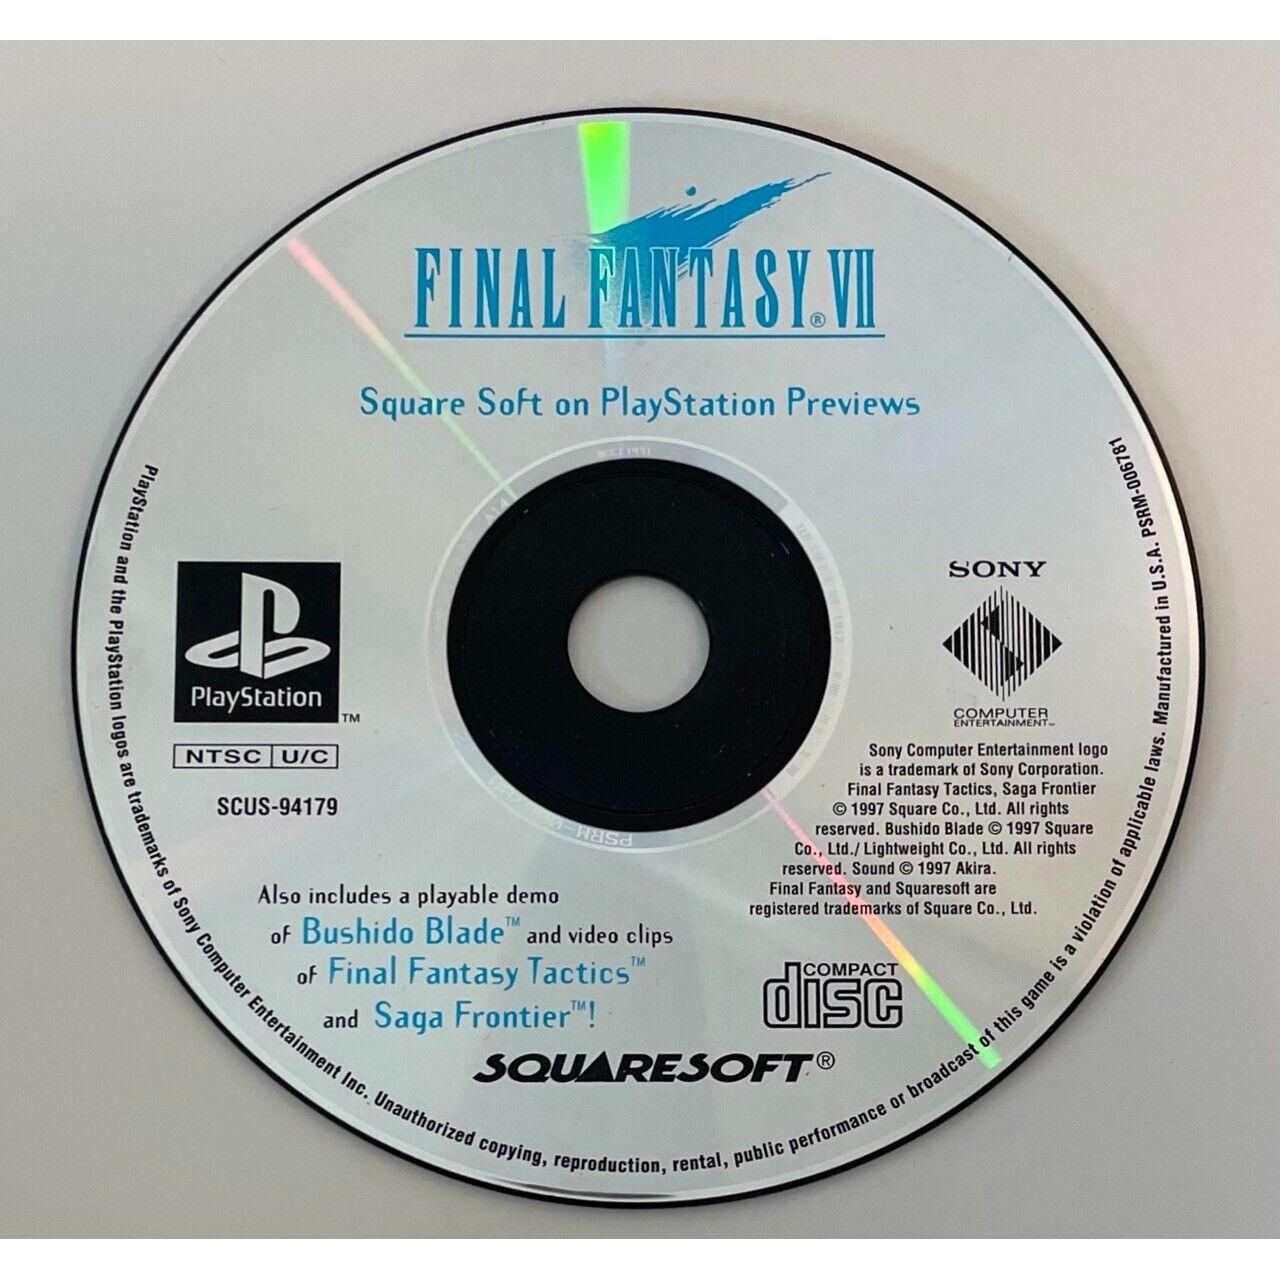 PS1 - Final Fantasy VII Squaresoft on PlayStation Previews